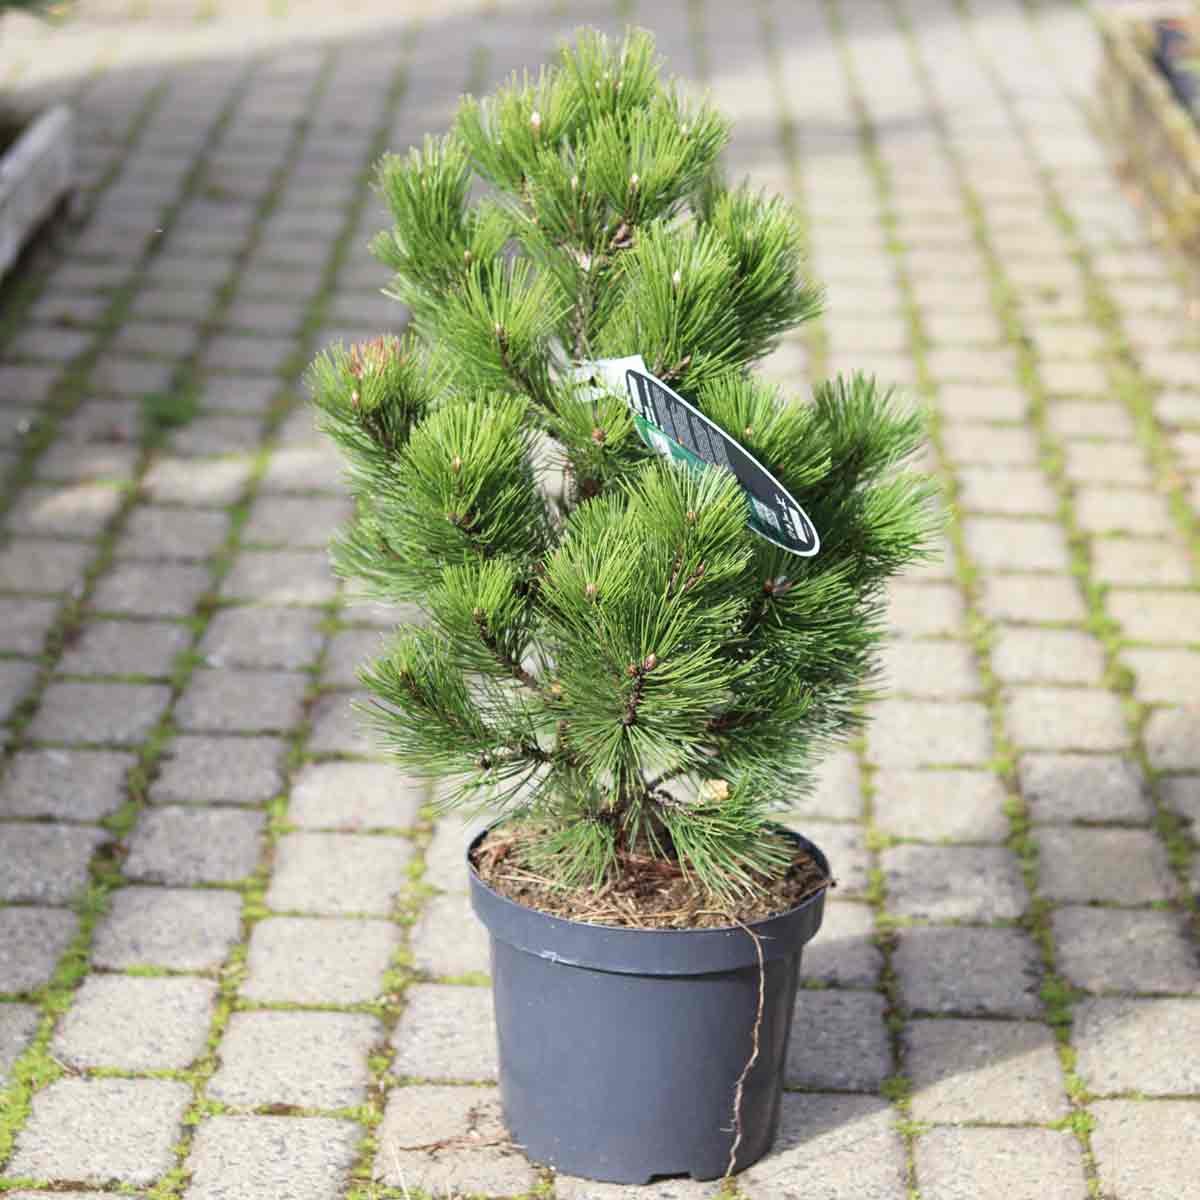 Pinus heldr. "Compact Gem" C7.5